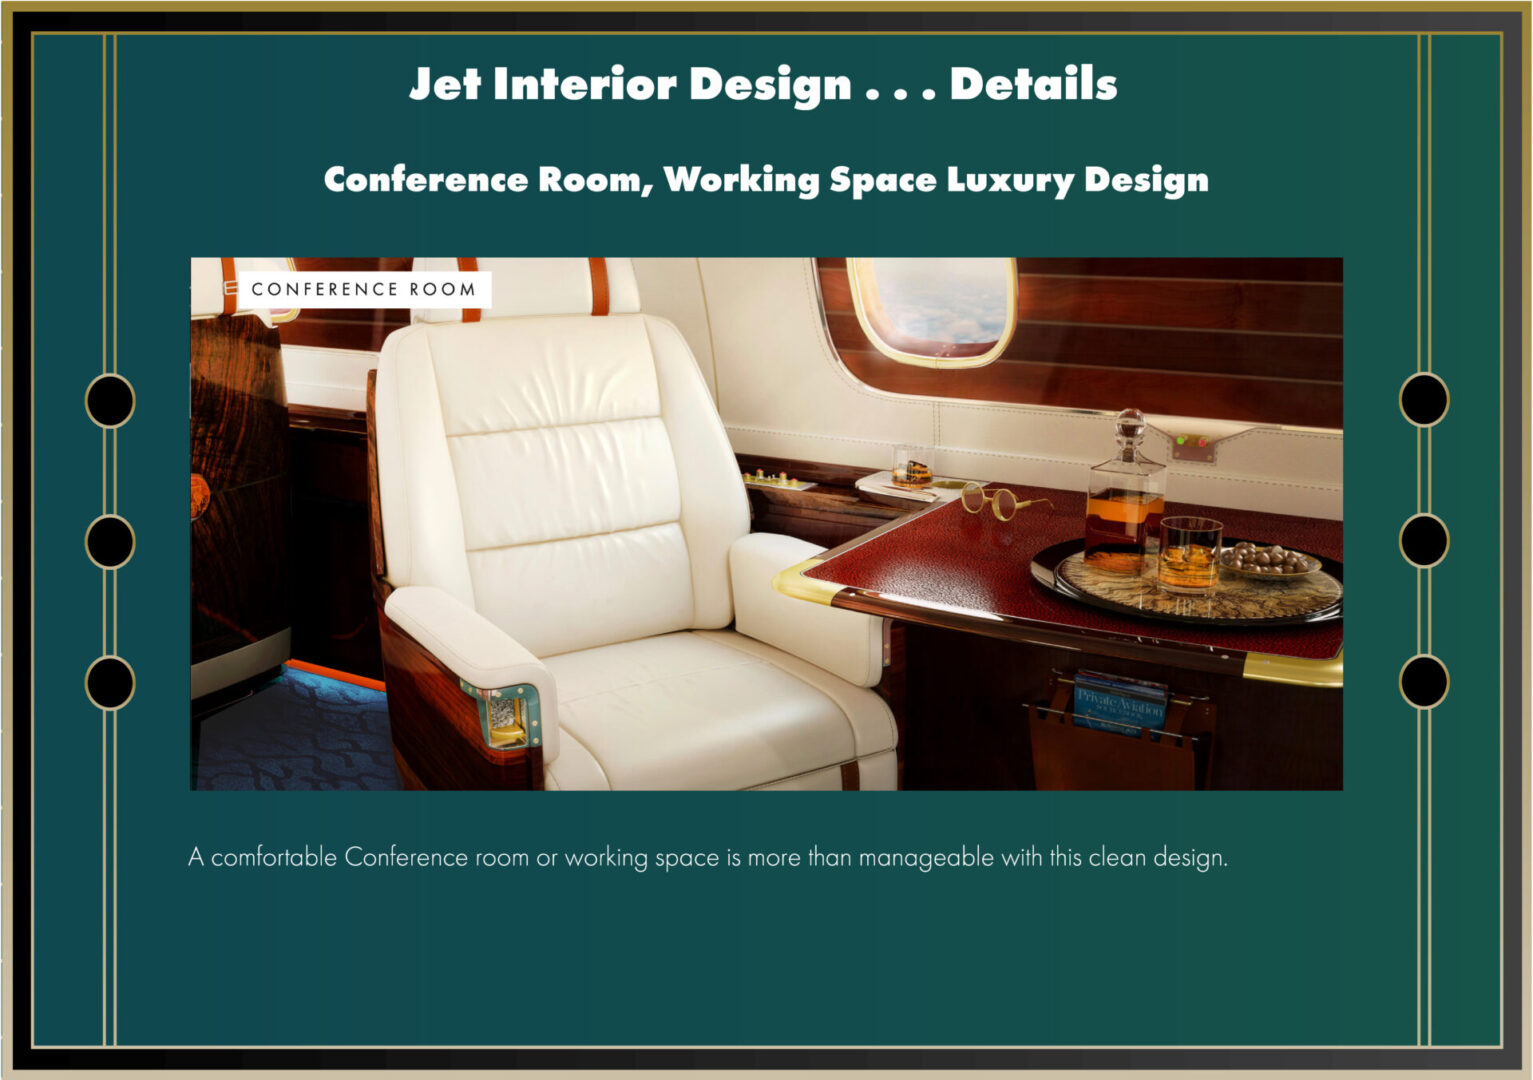 Jet Interior Design for a Conference Room